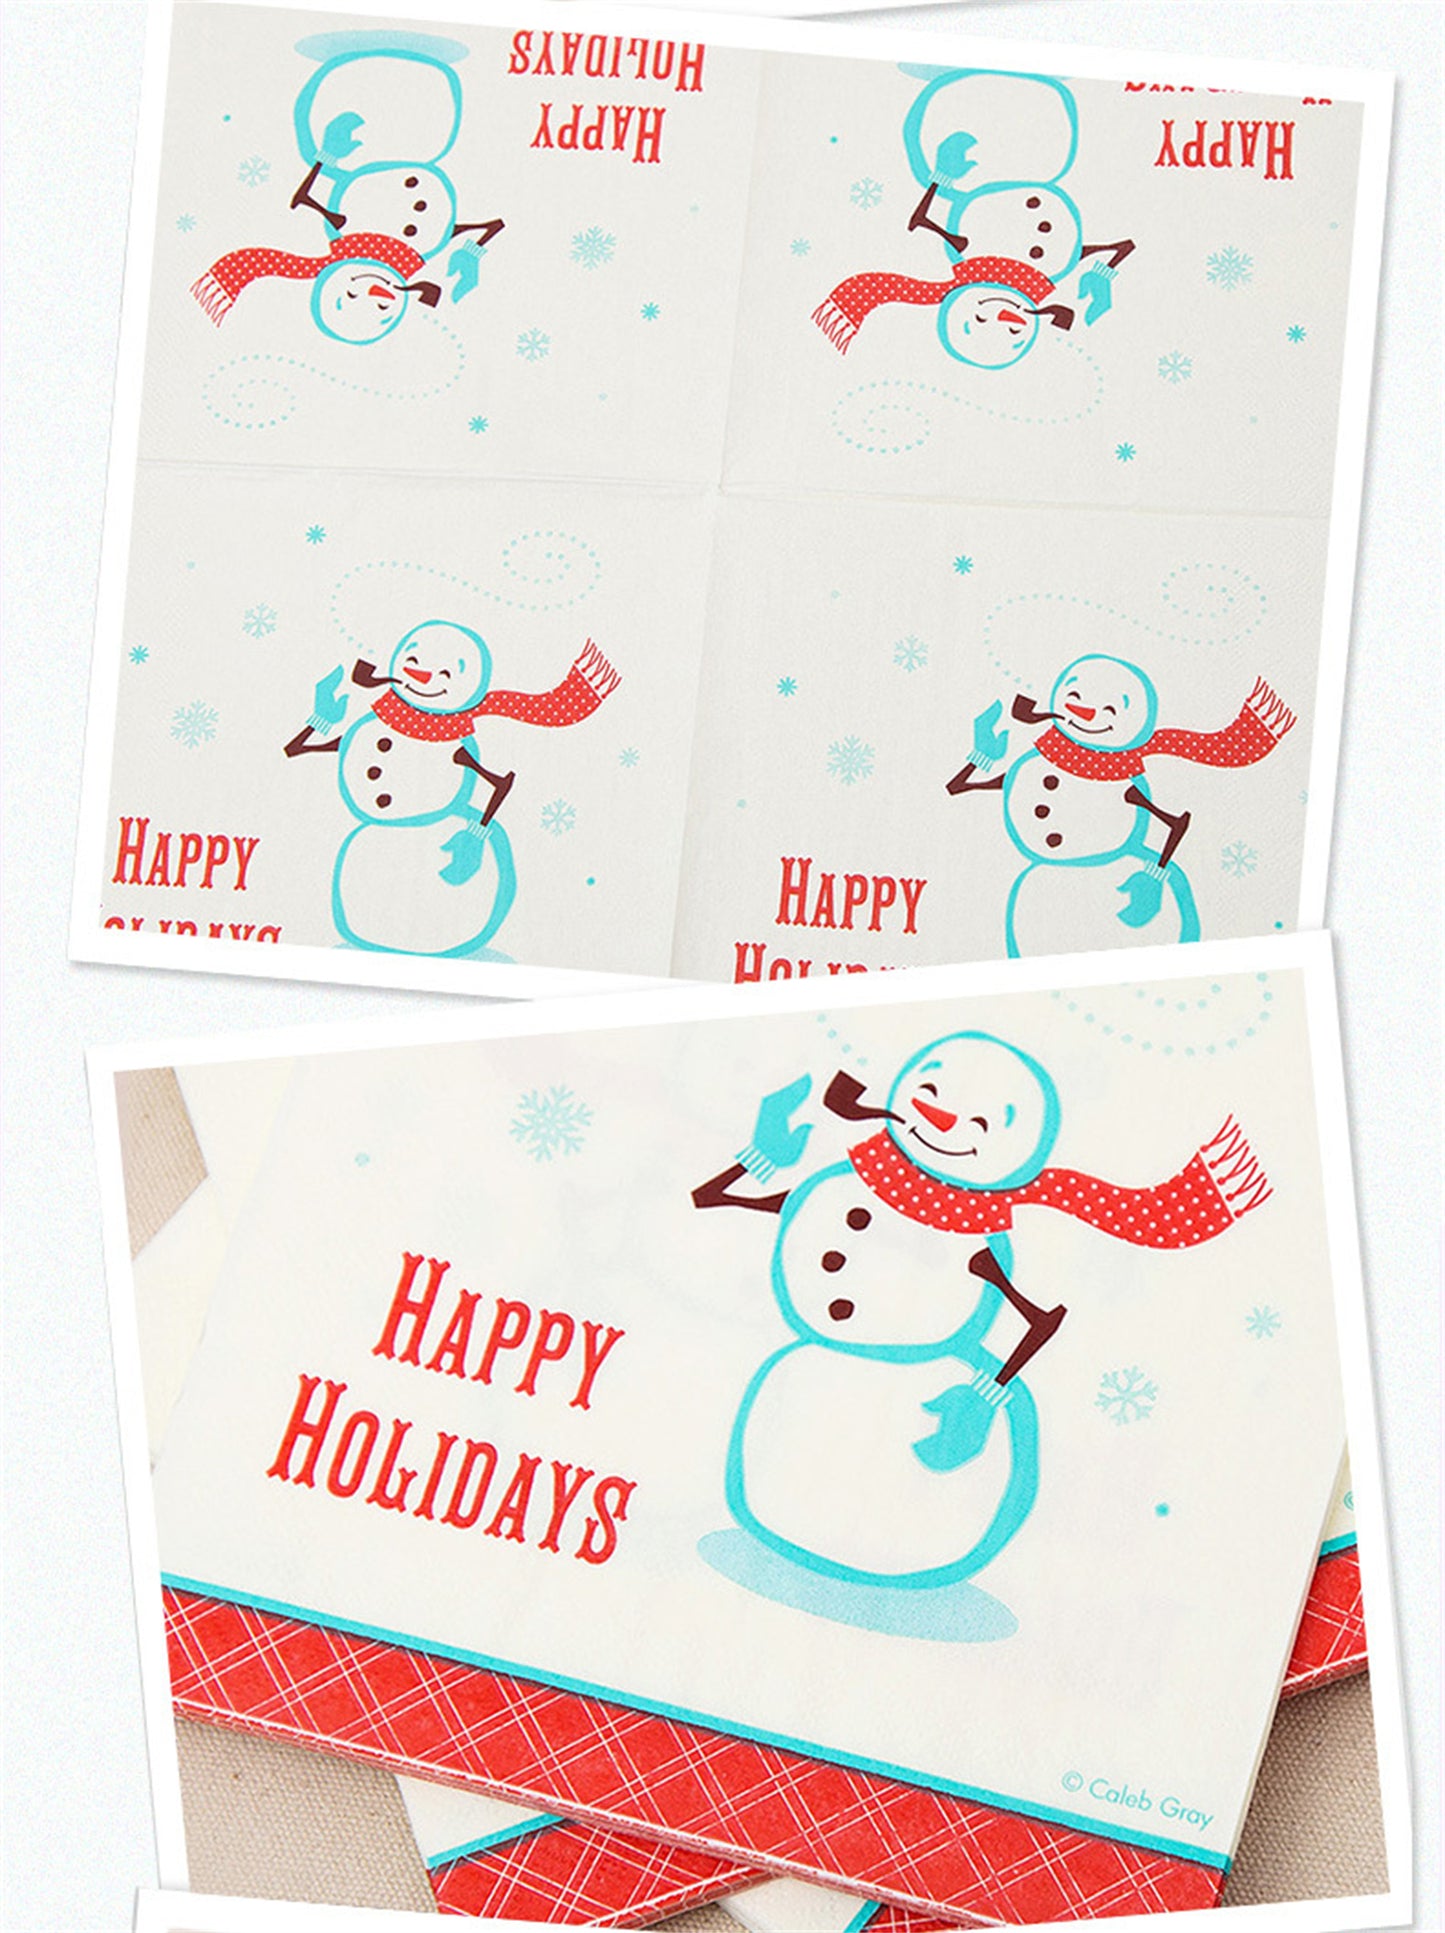 Snowman printing paper towel